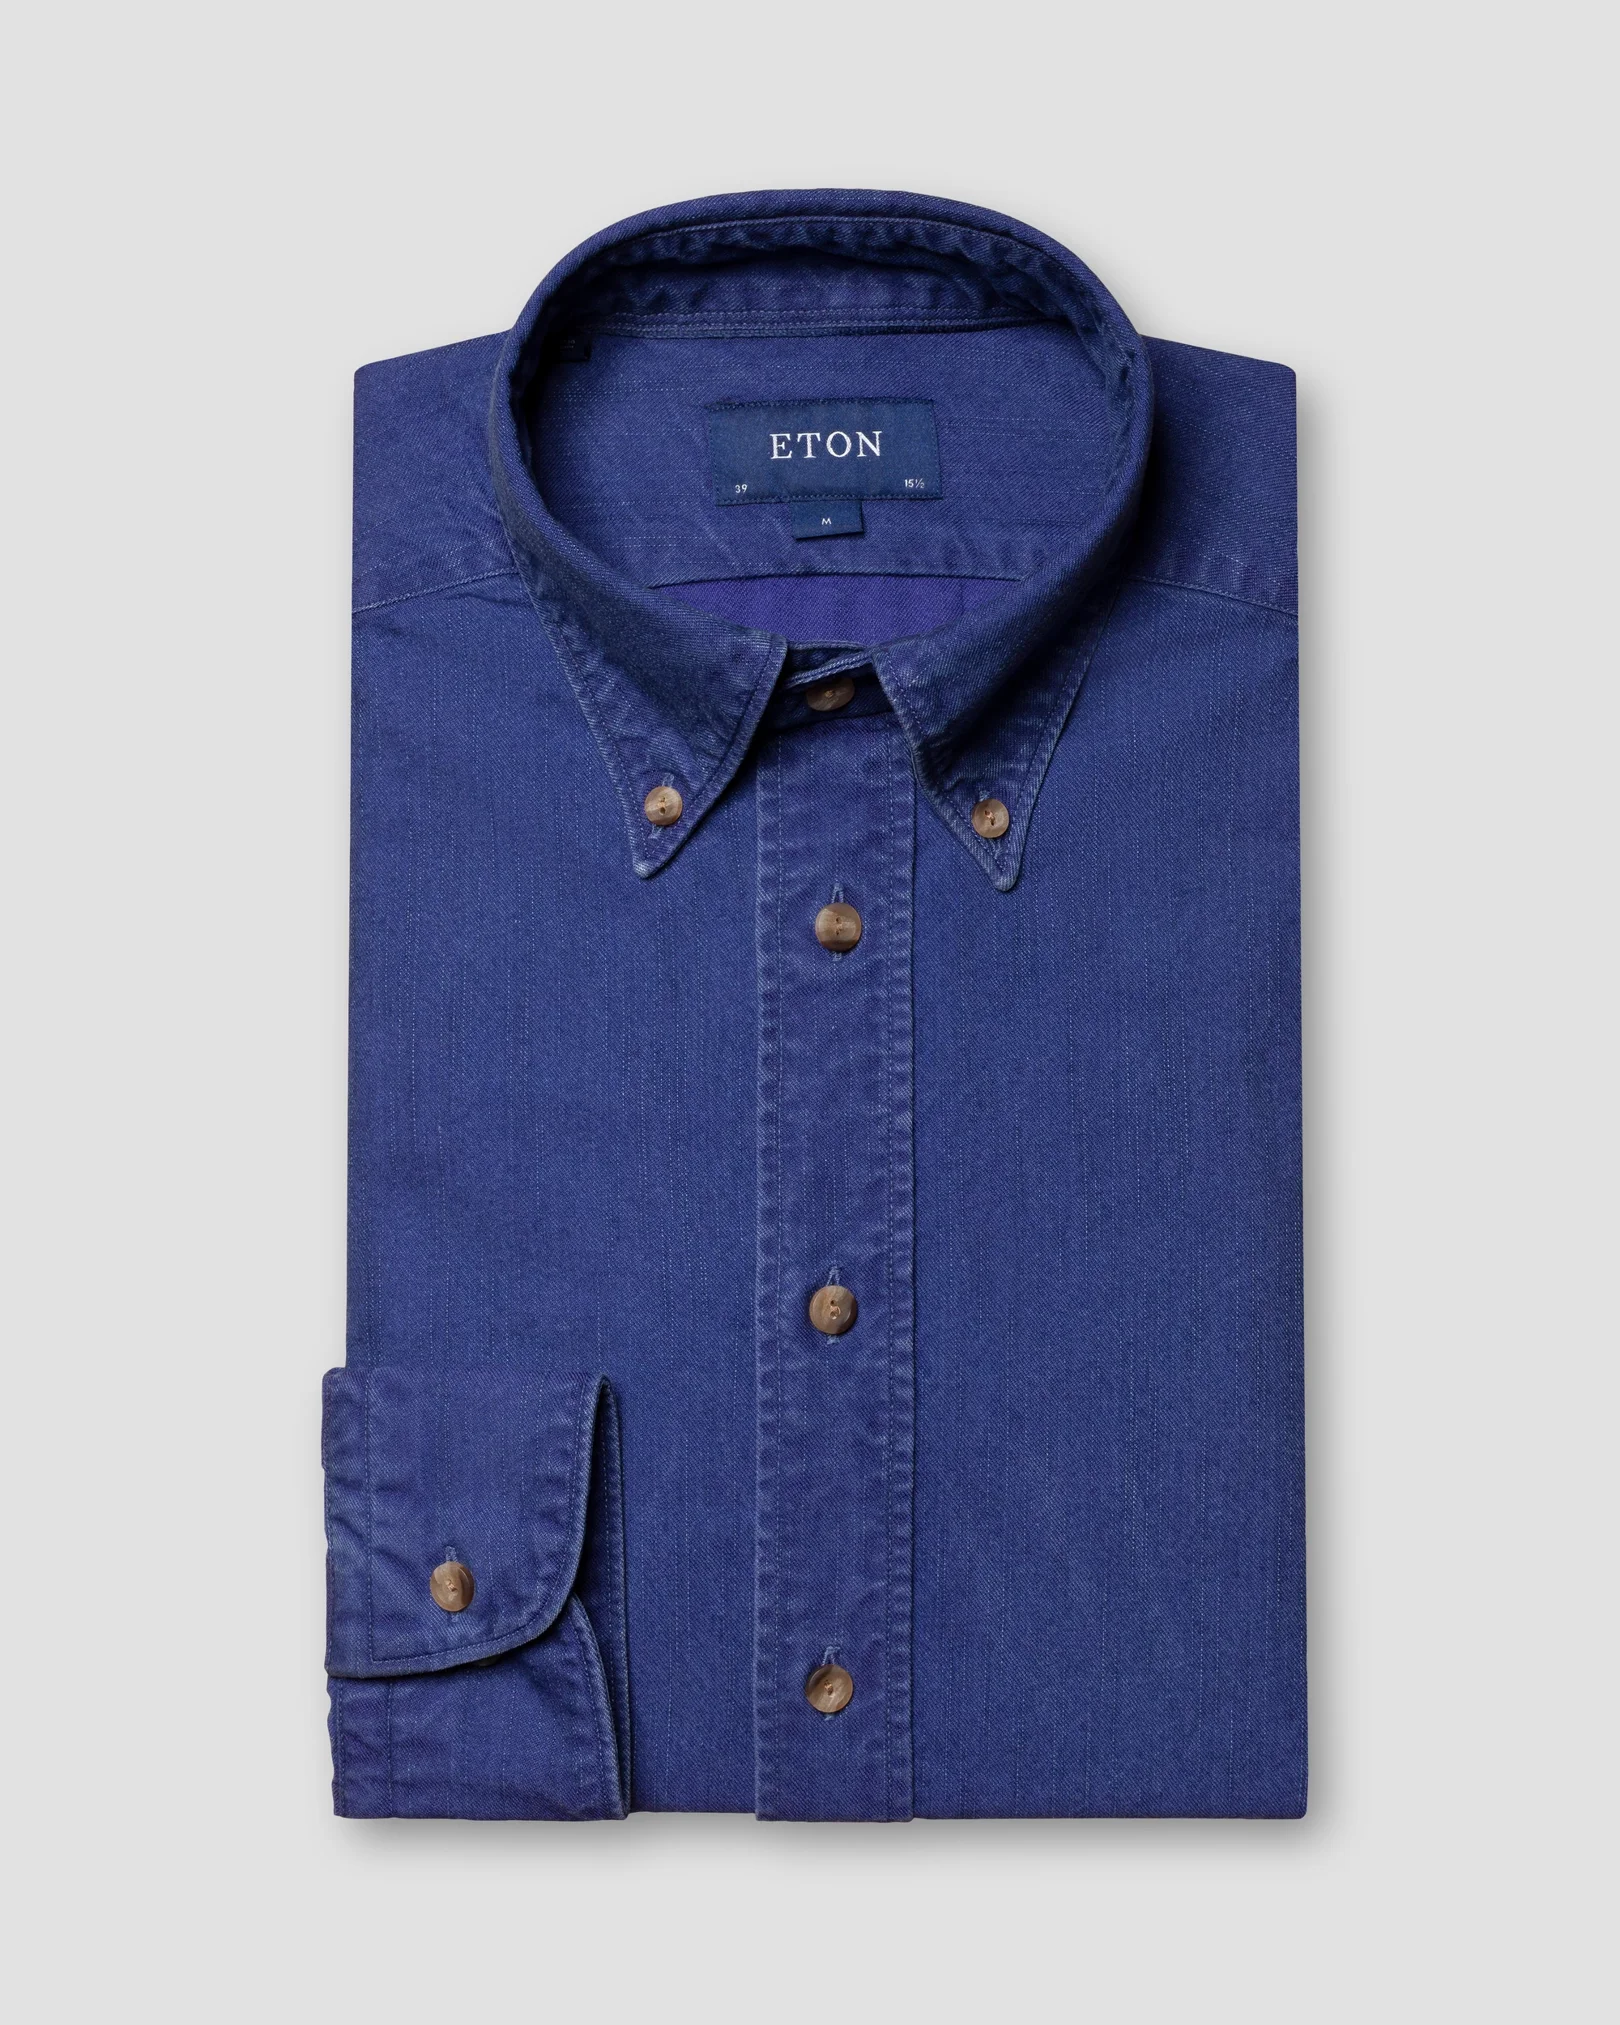 Eton - mid blue denim shirt with horn buttons button down